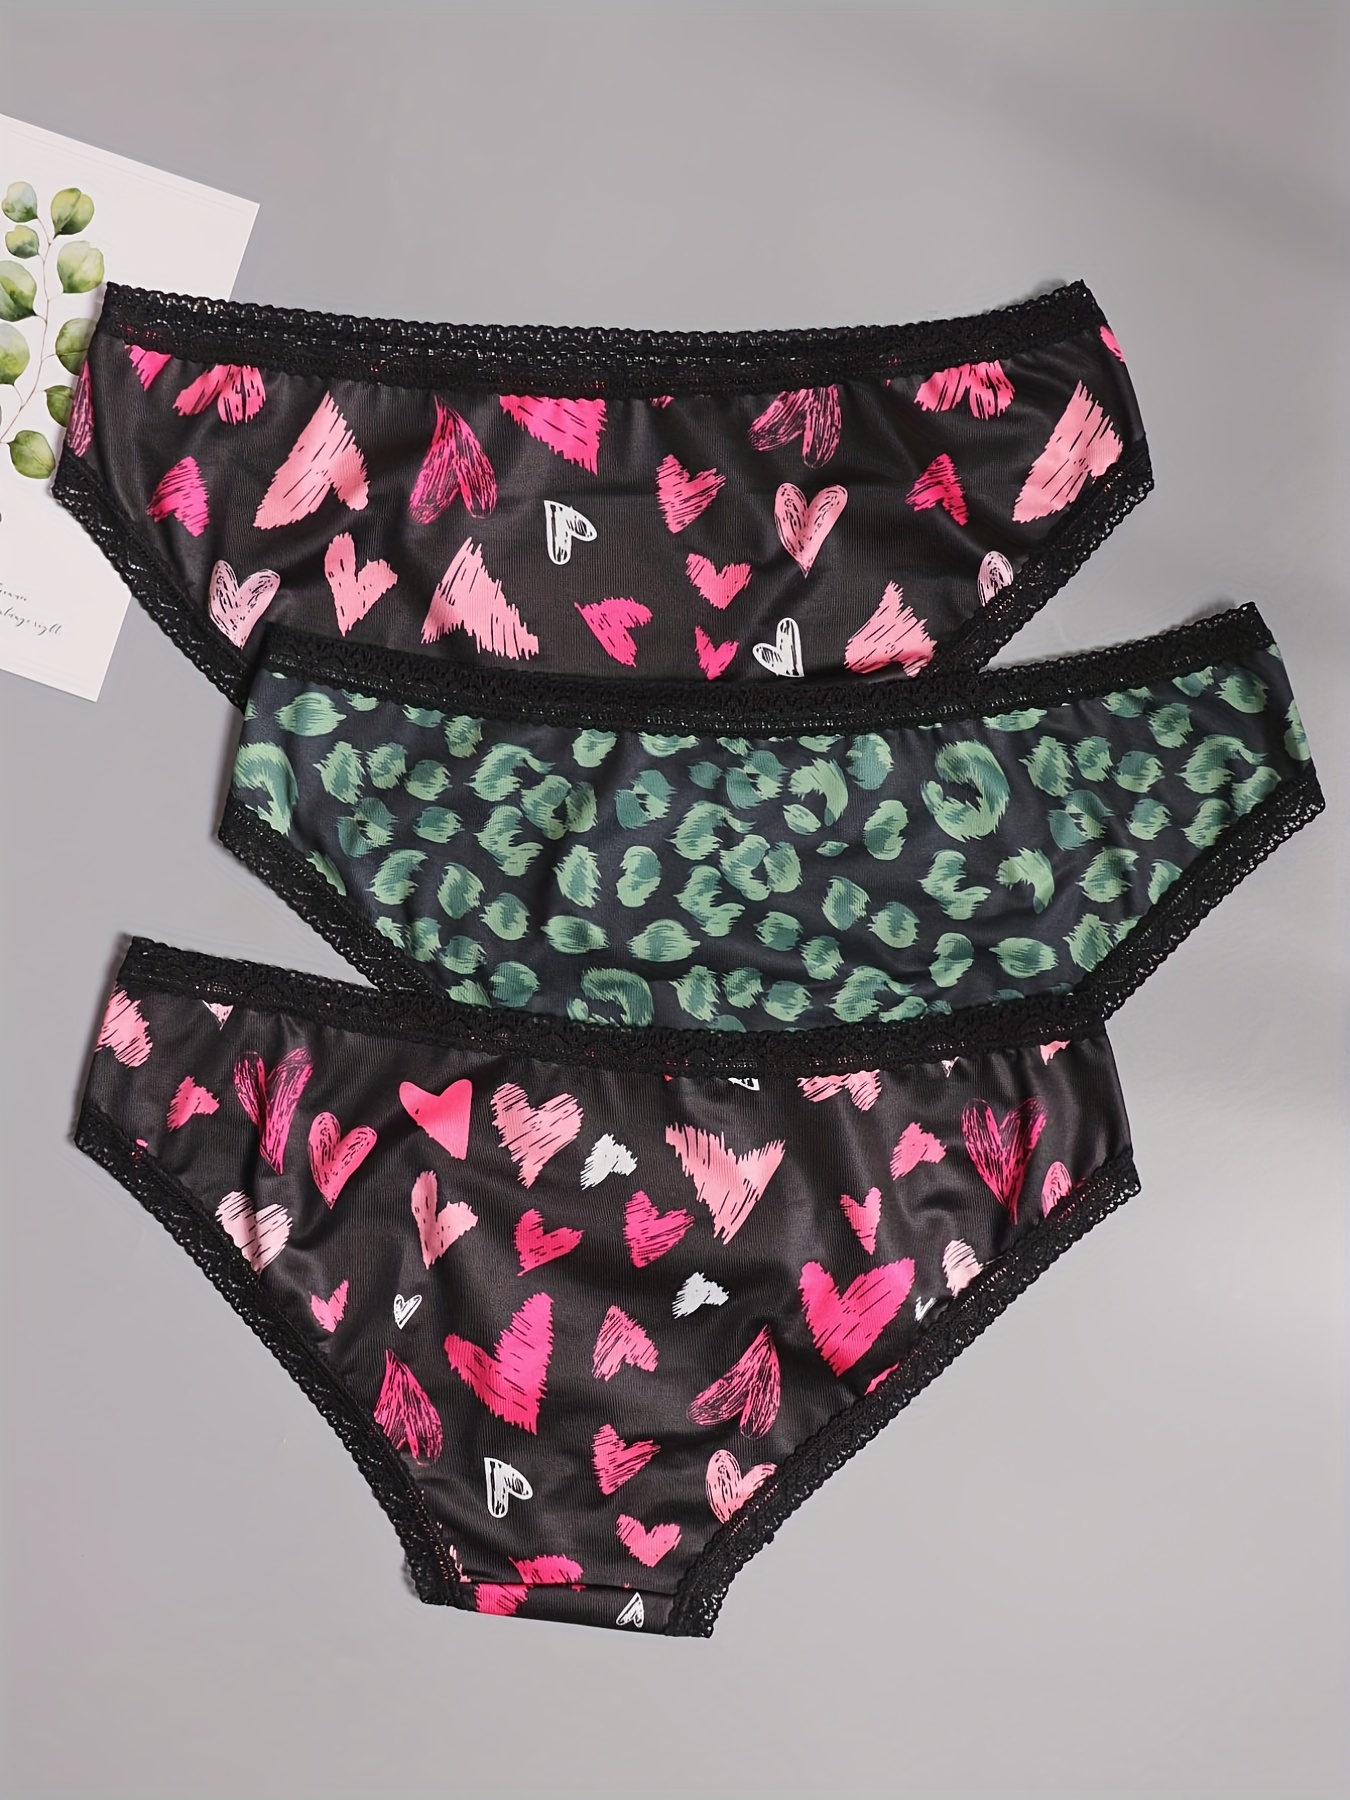 Dircho Women Underwear Thong Variety Pack Lace Trims Cheekies